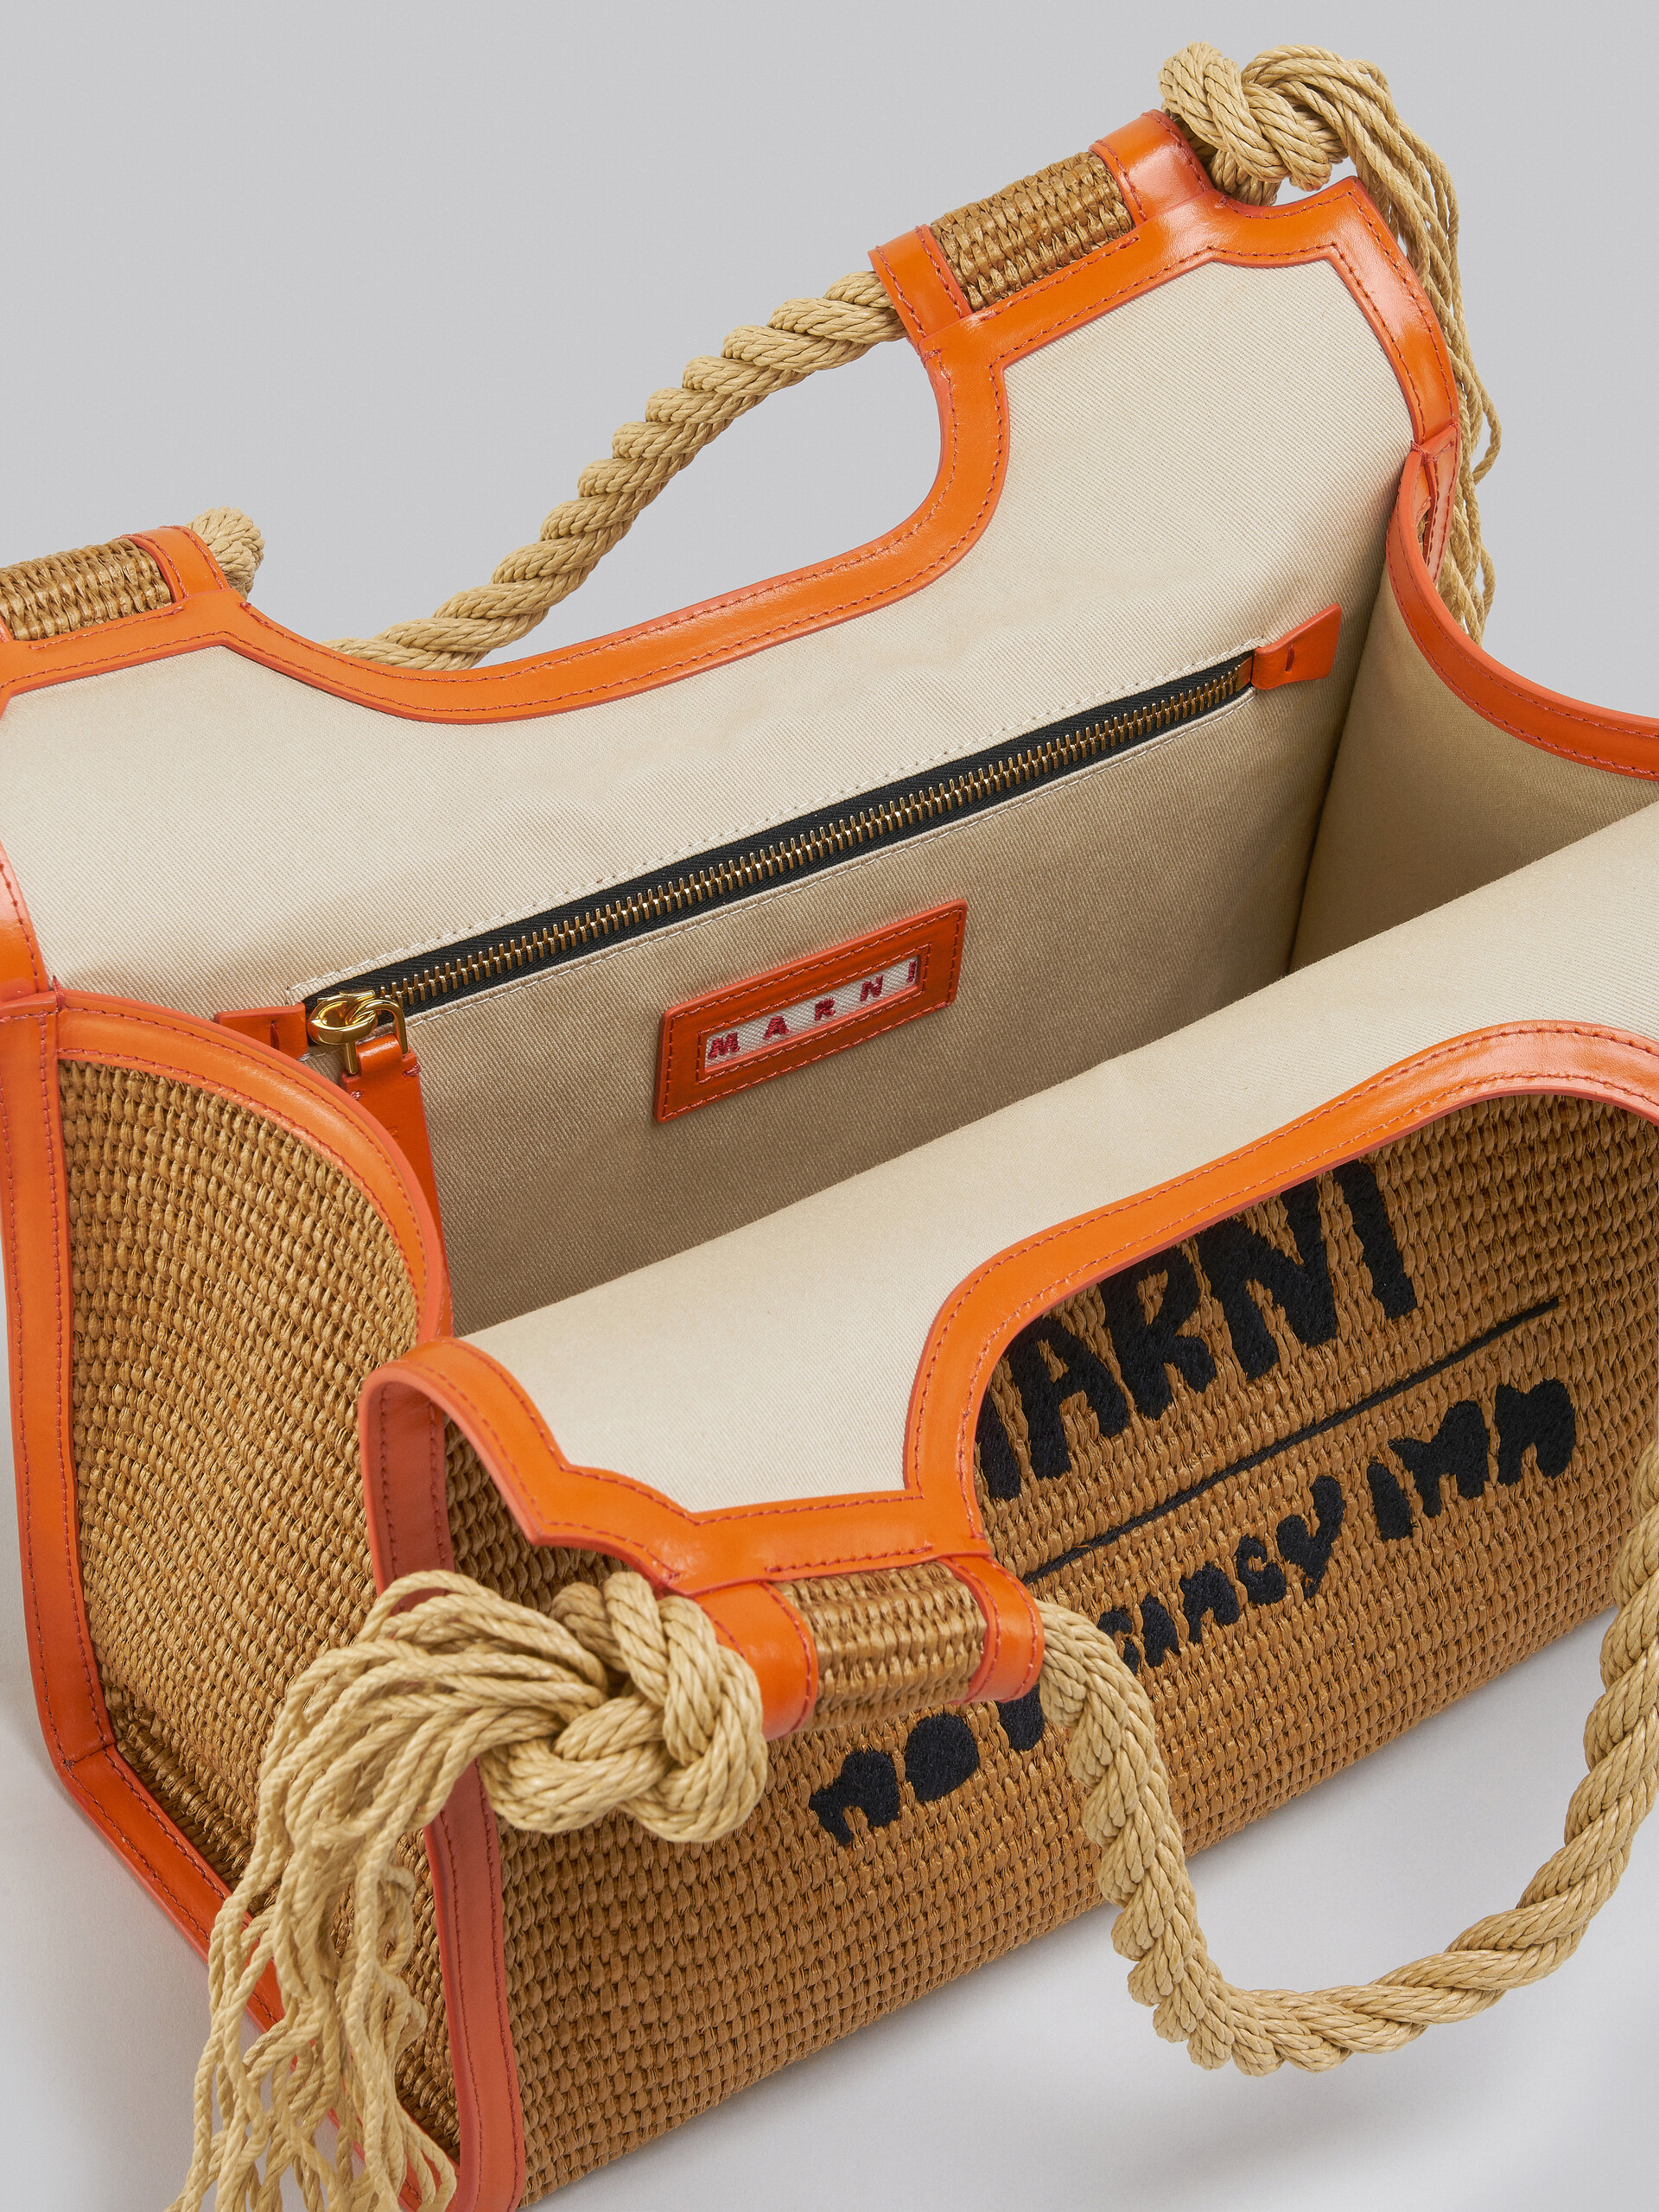 Marni x No Vacancy Inn - Marcel Tote Bag in raffia with orange trims - Handbag - Image 4